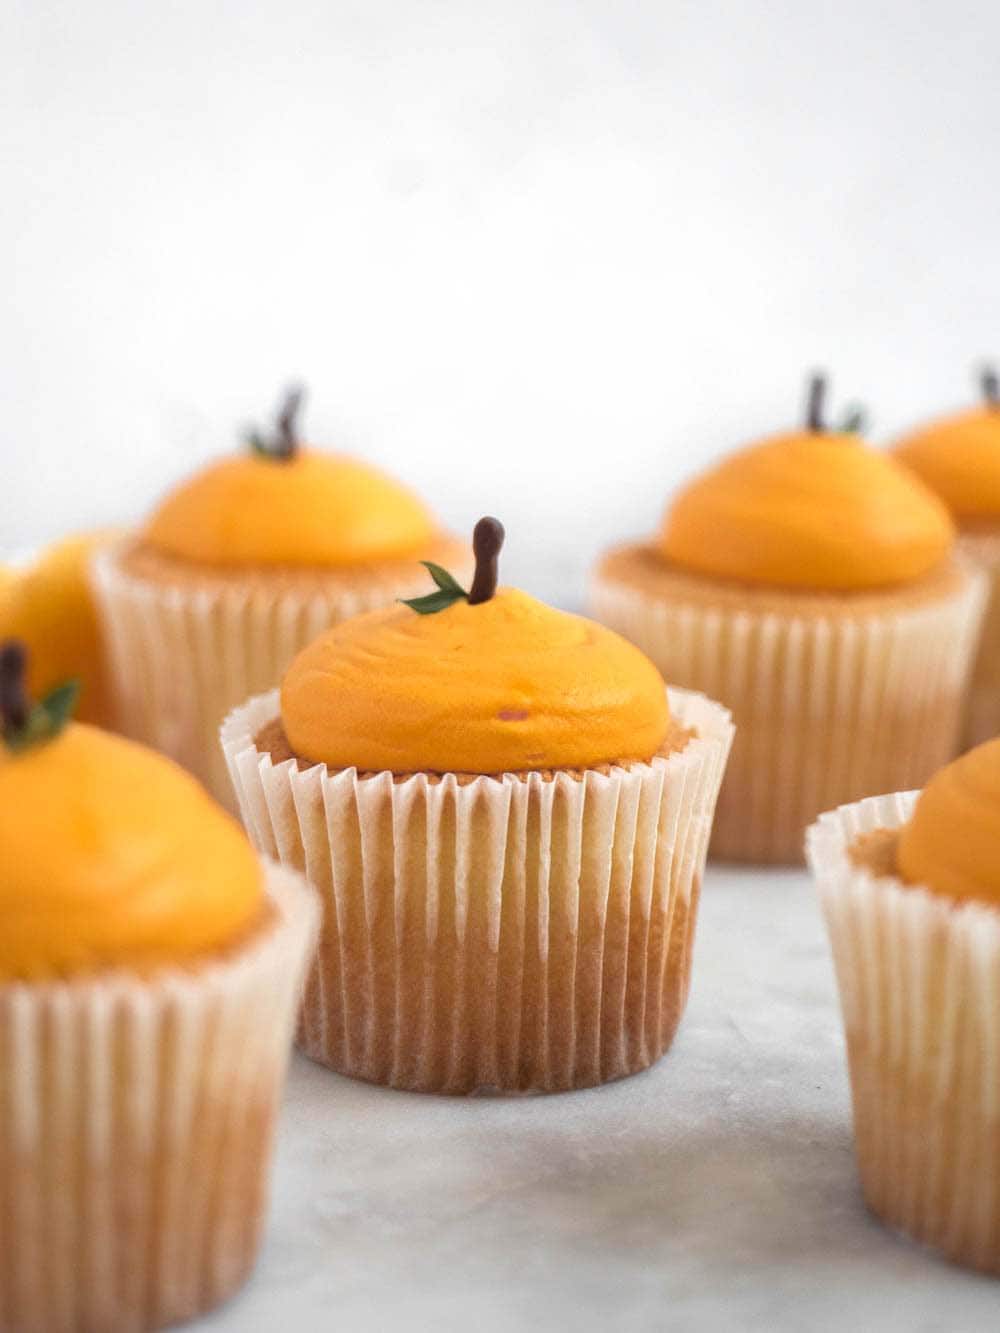 Mandarin shaped cotton-soft chiffon cupcakes with citrus whipped cream